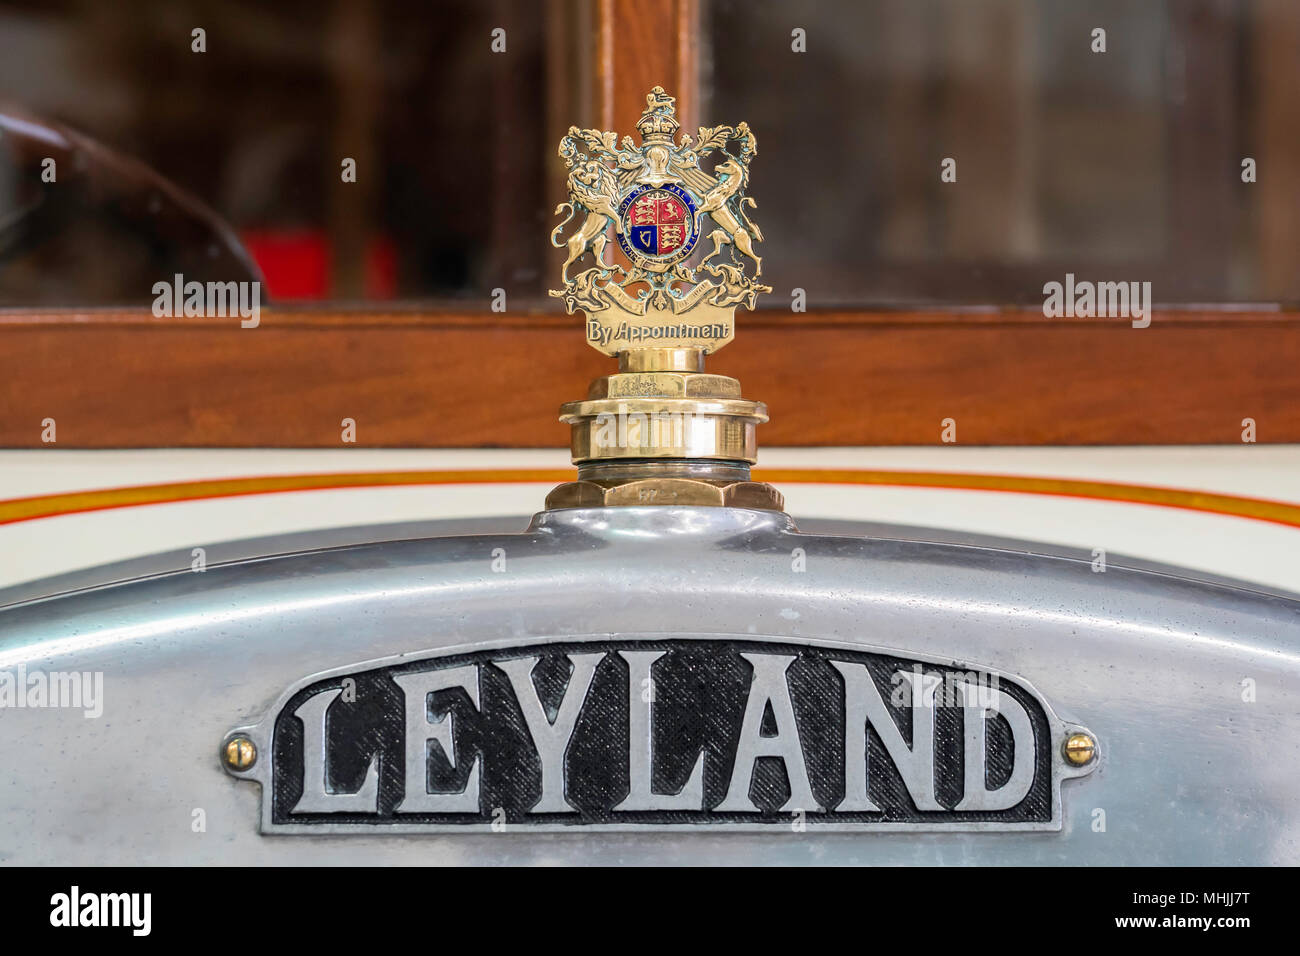 Leyland name plate, 1923 Stock Photo